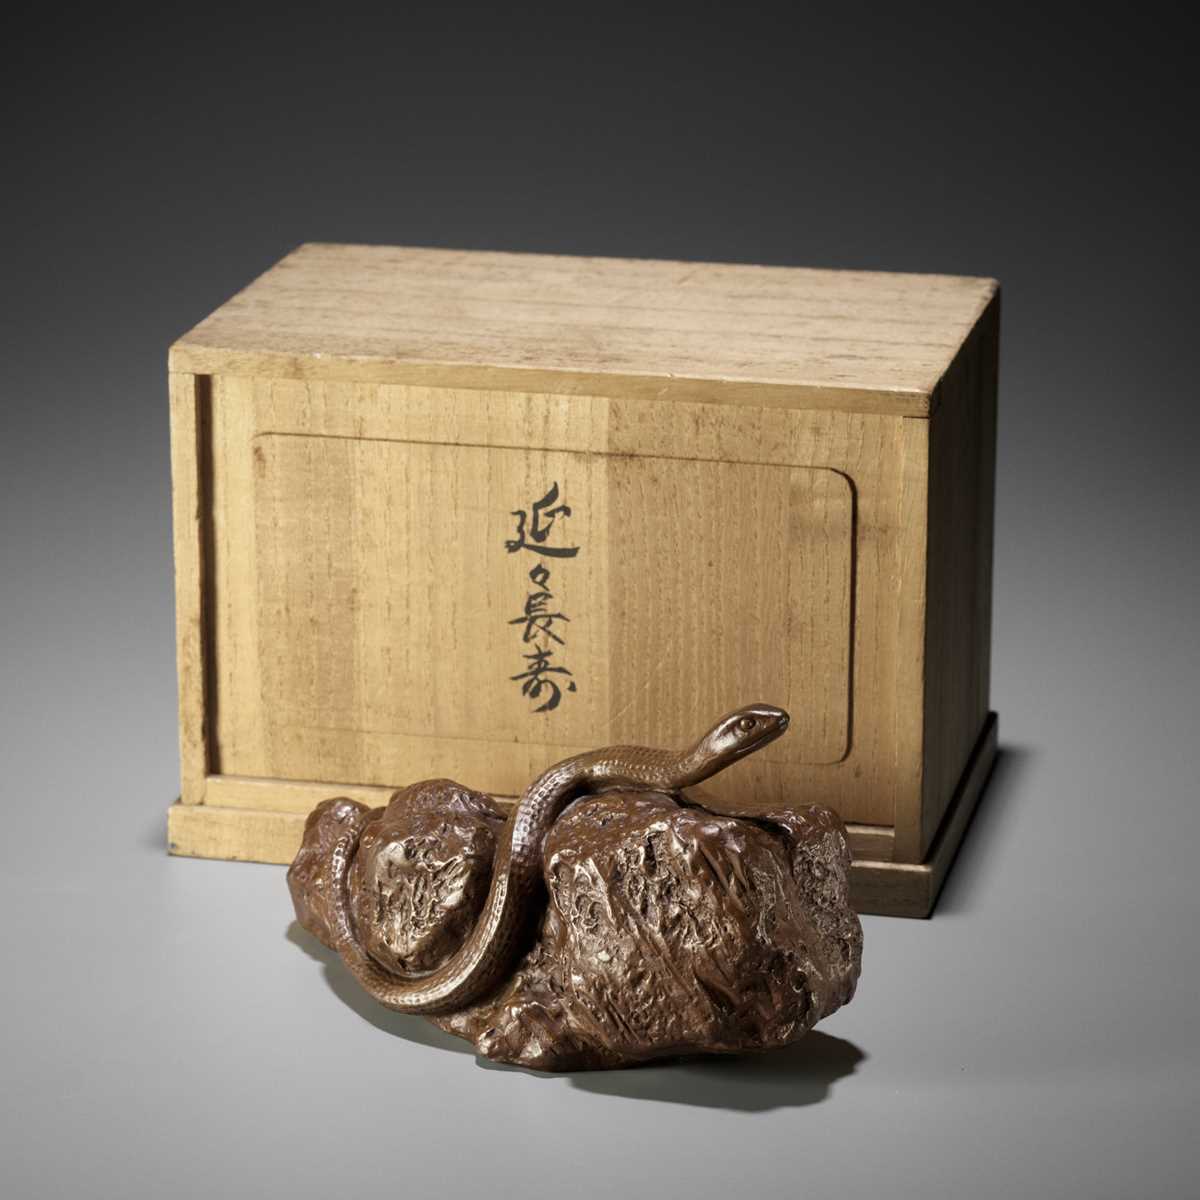 Lot 89 - TSUDA EIJU: A BRONZE OKIMONO OF A SNAKE ON A ROCK